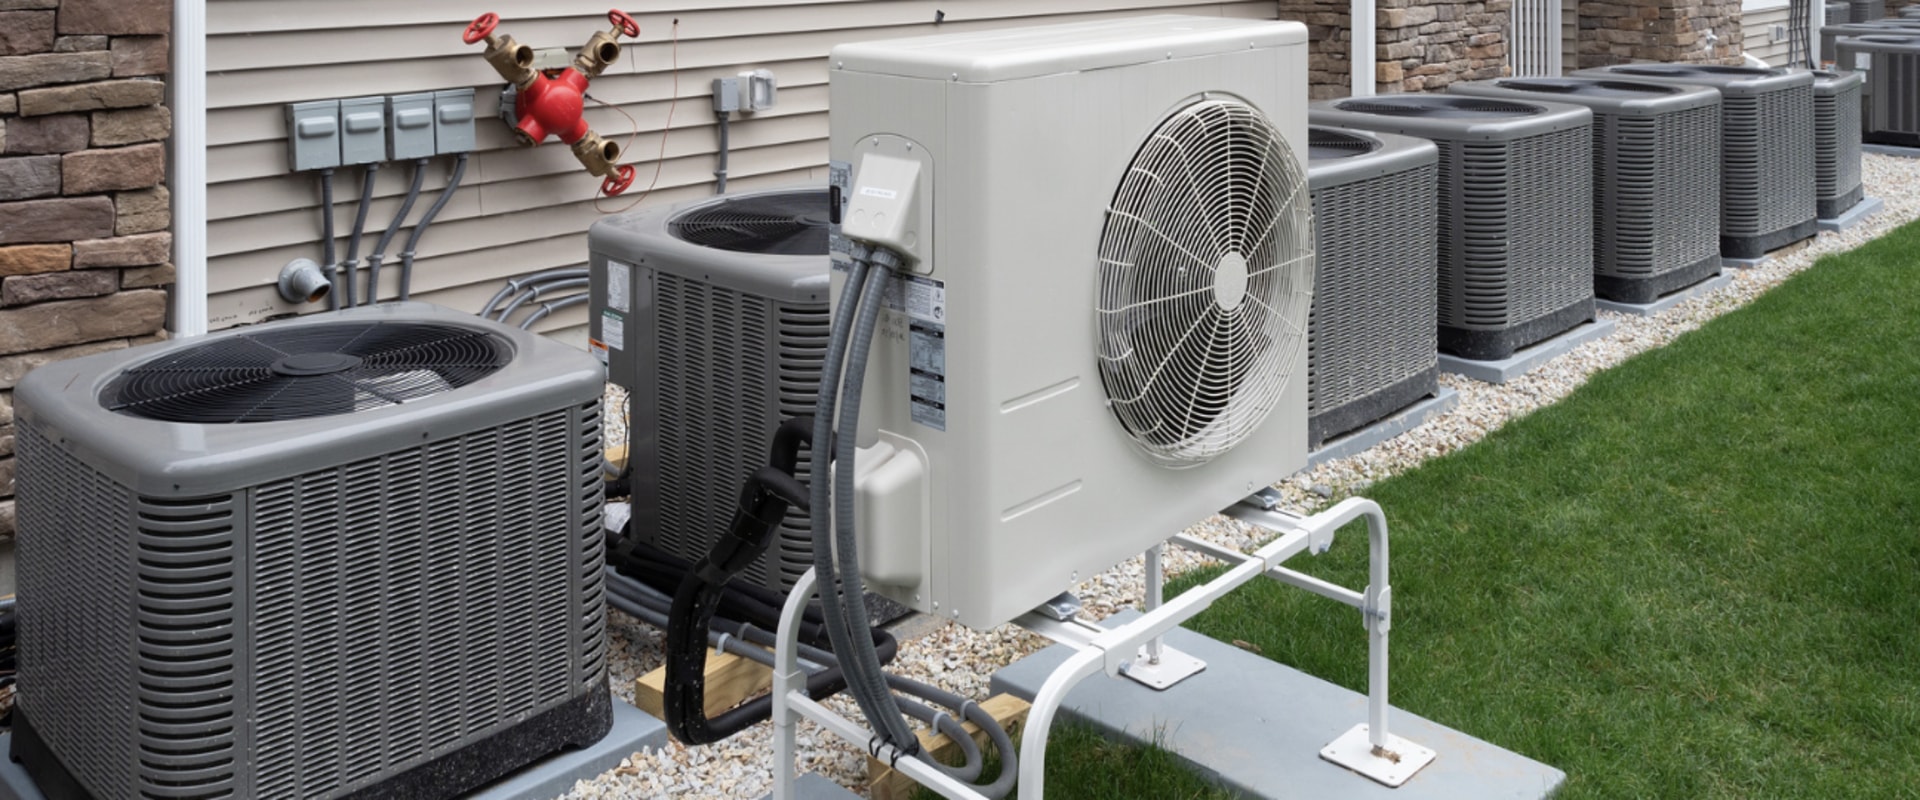 HVAC Air Conditioning Repair Services In Miami Gardens FL